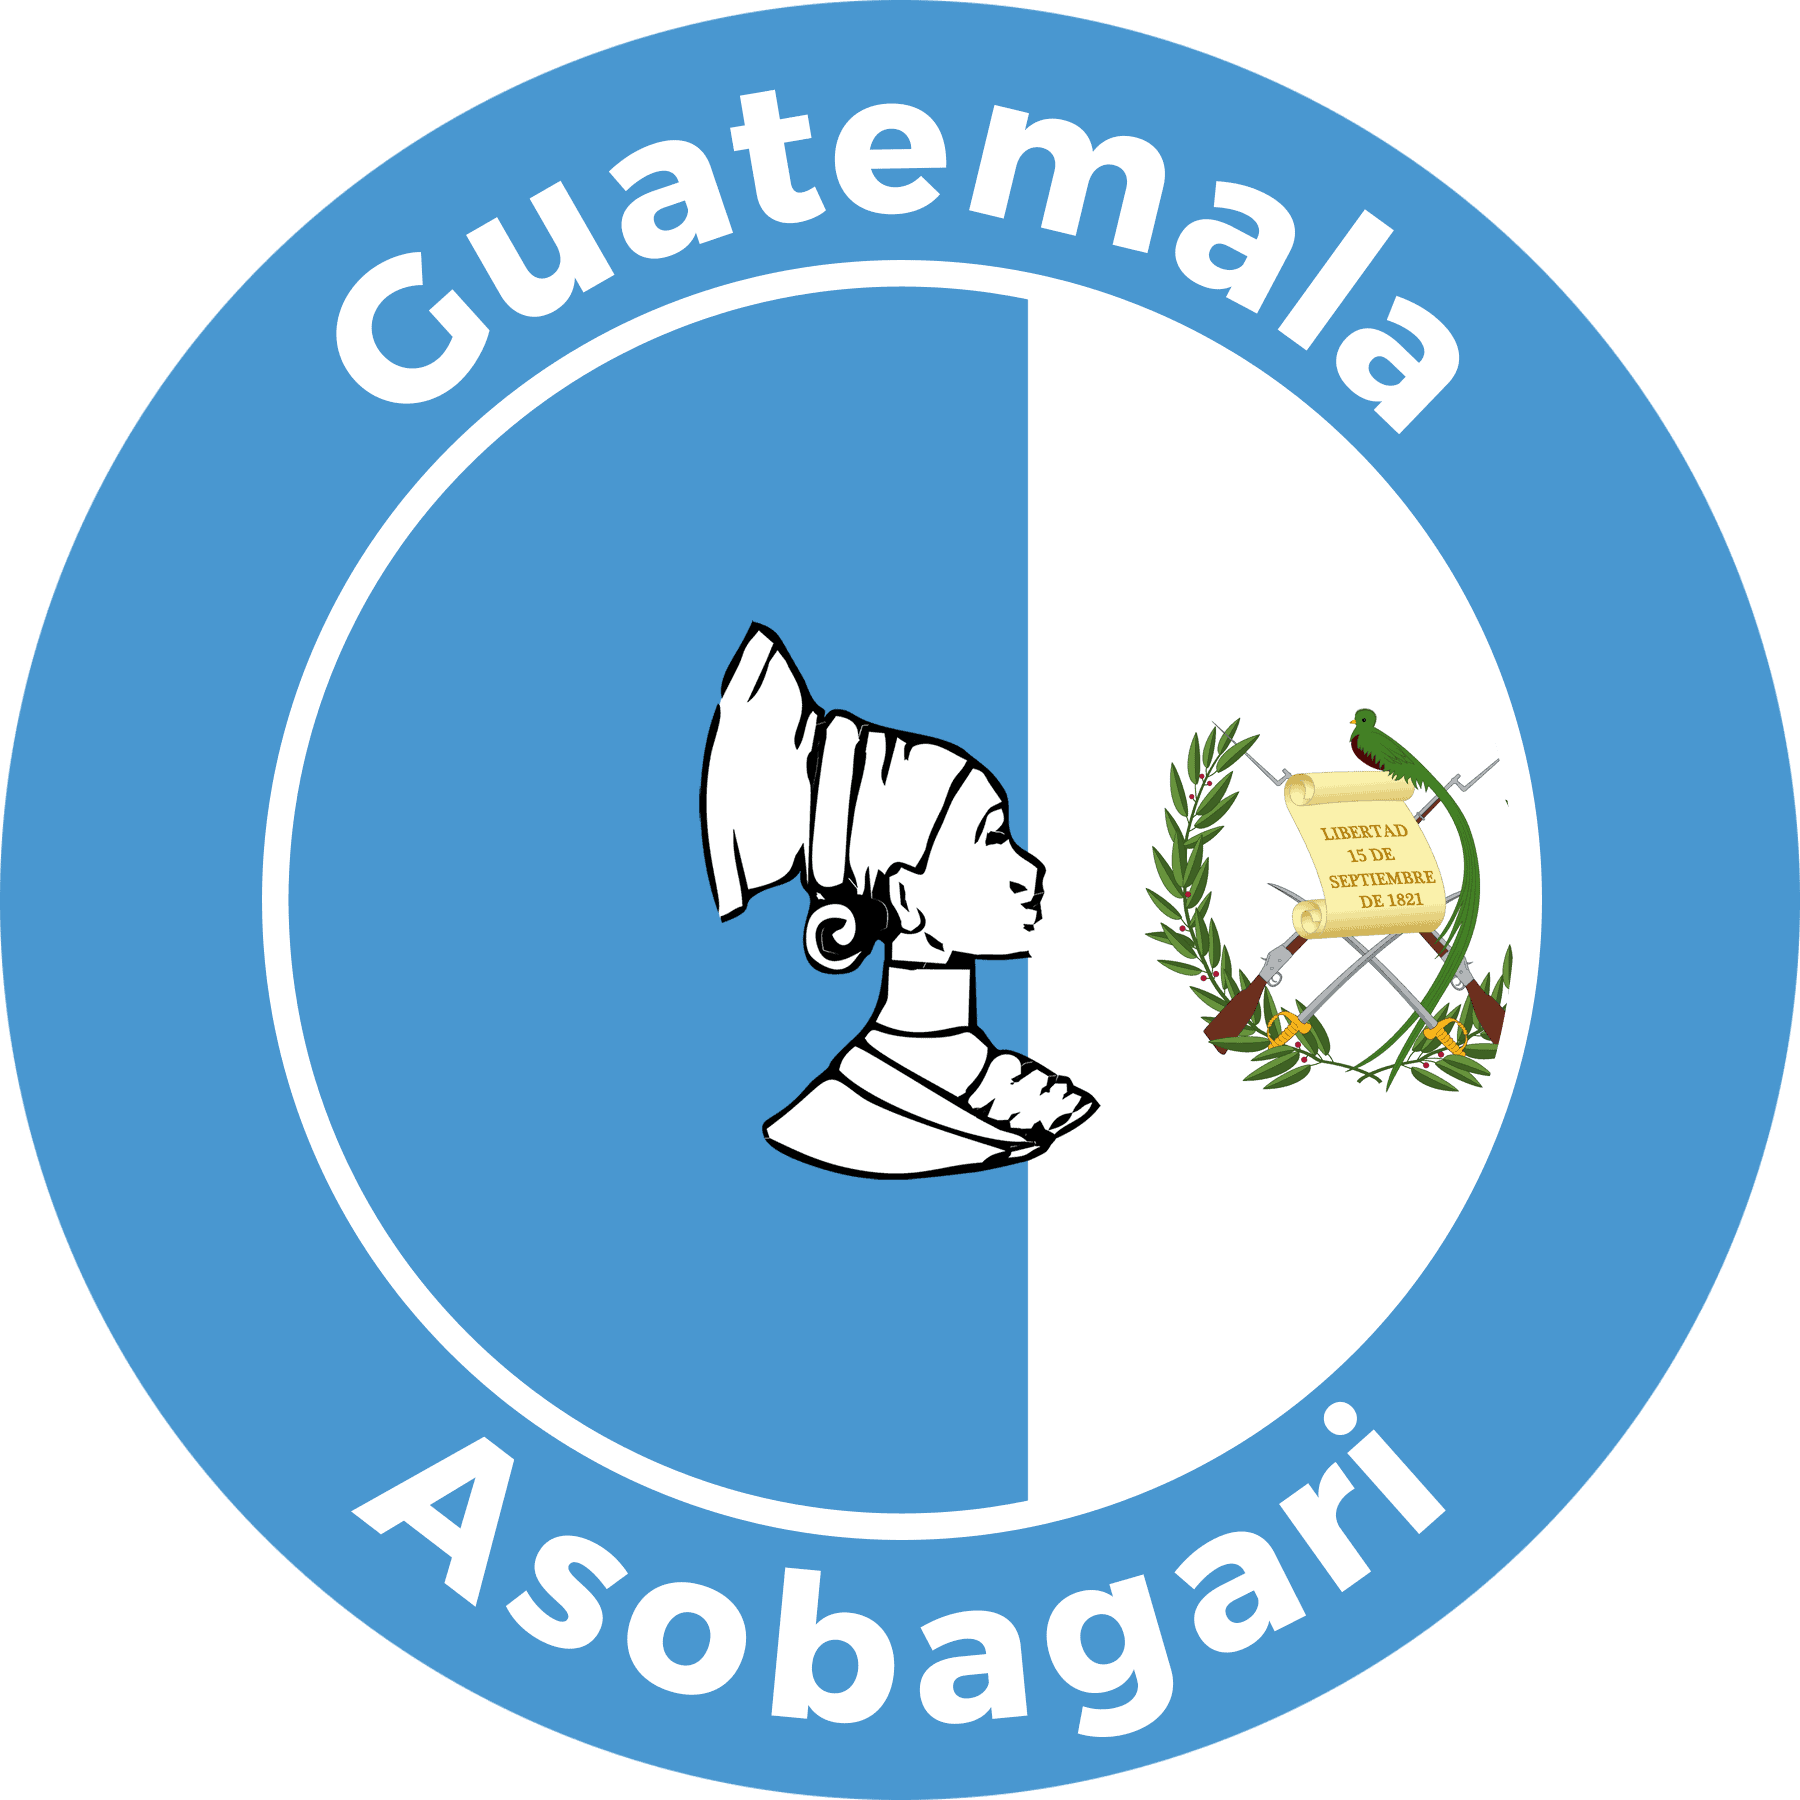 Guatemala Ascbagari coffee label